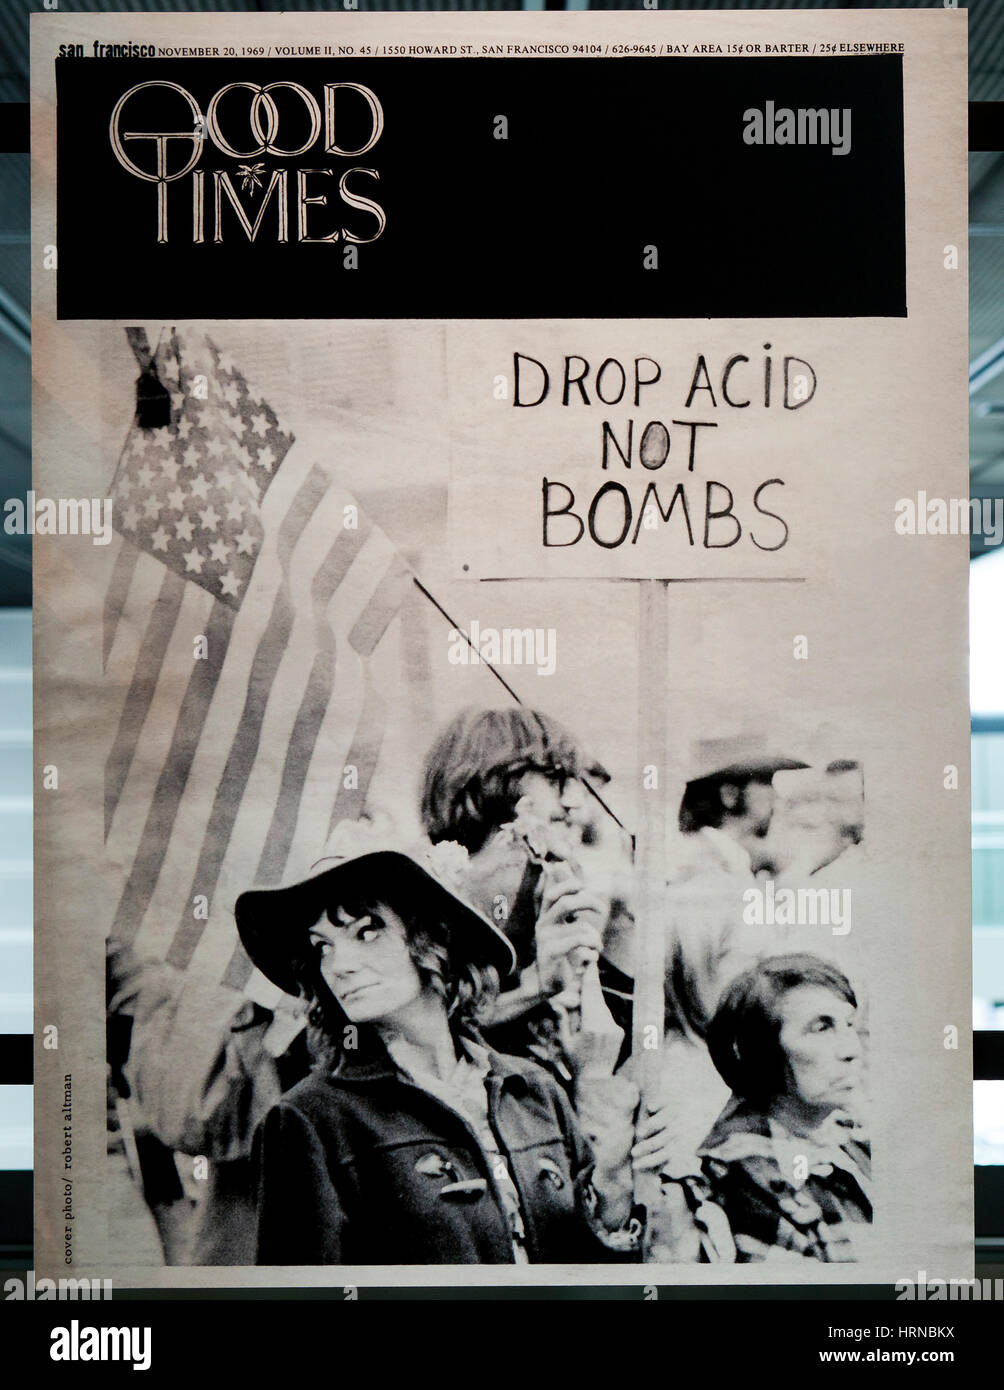 Good Times magazine cover, circa 1969 - USA Stock Photo